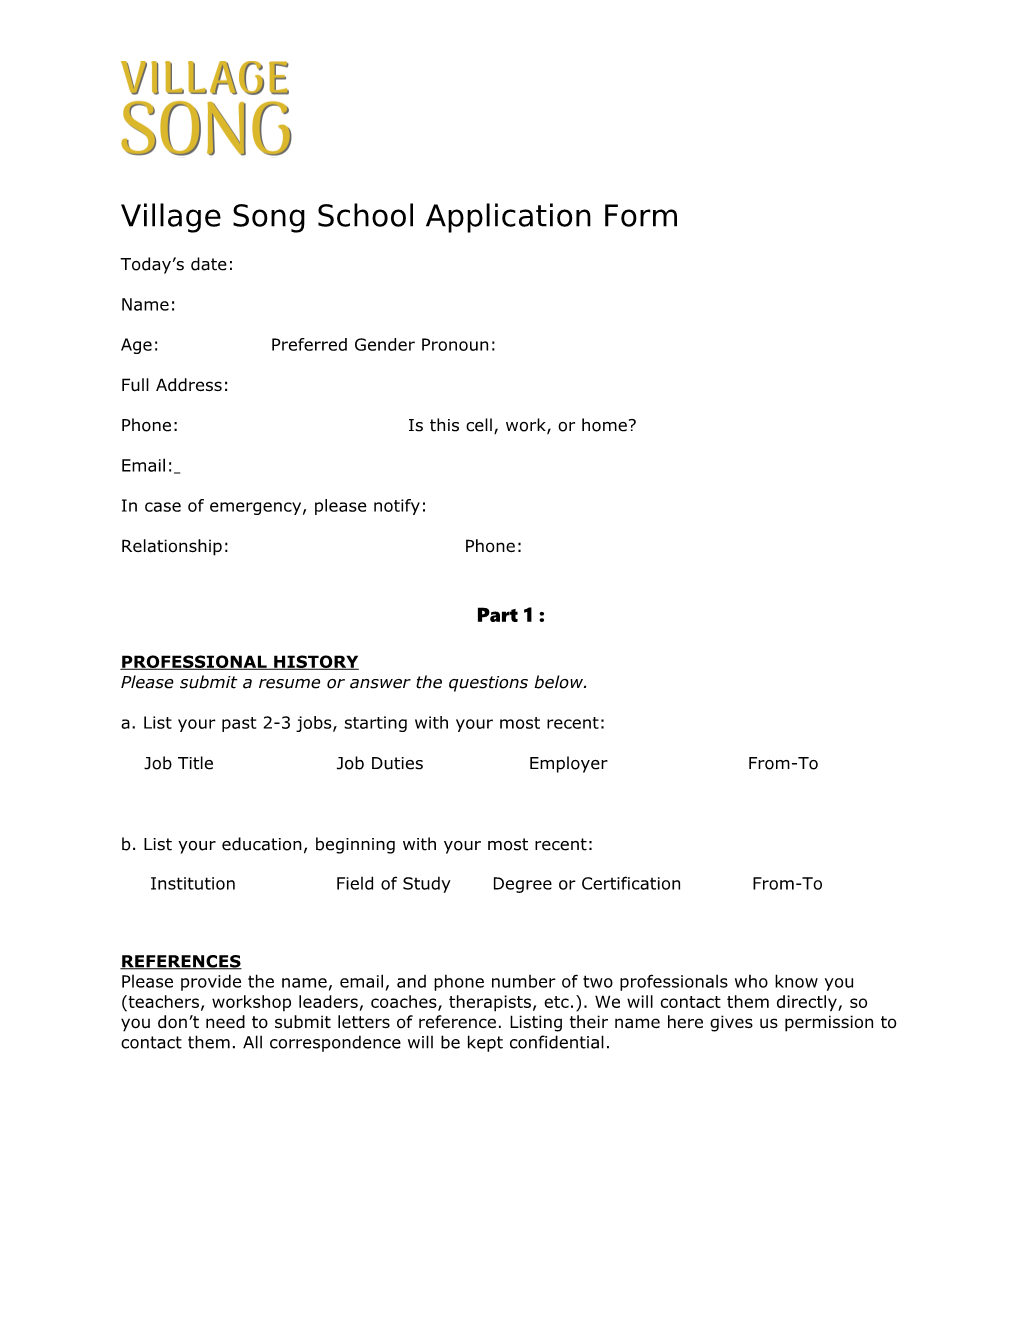 Village Song School Application Form